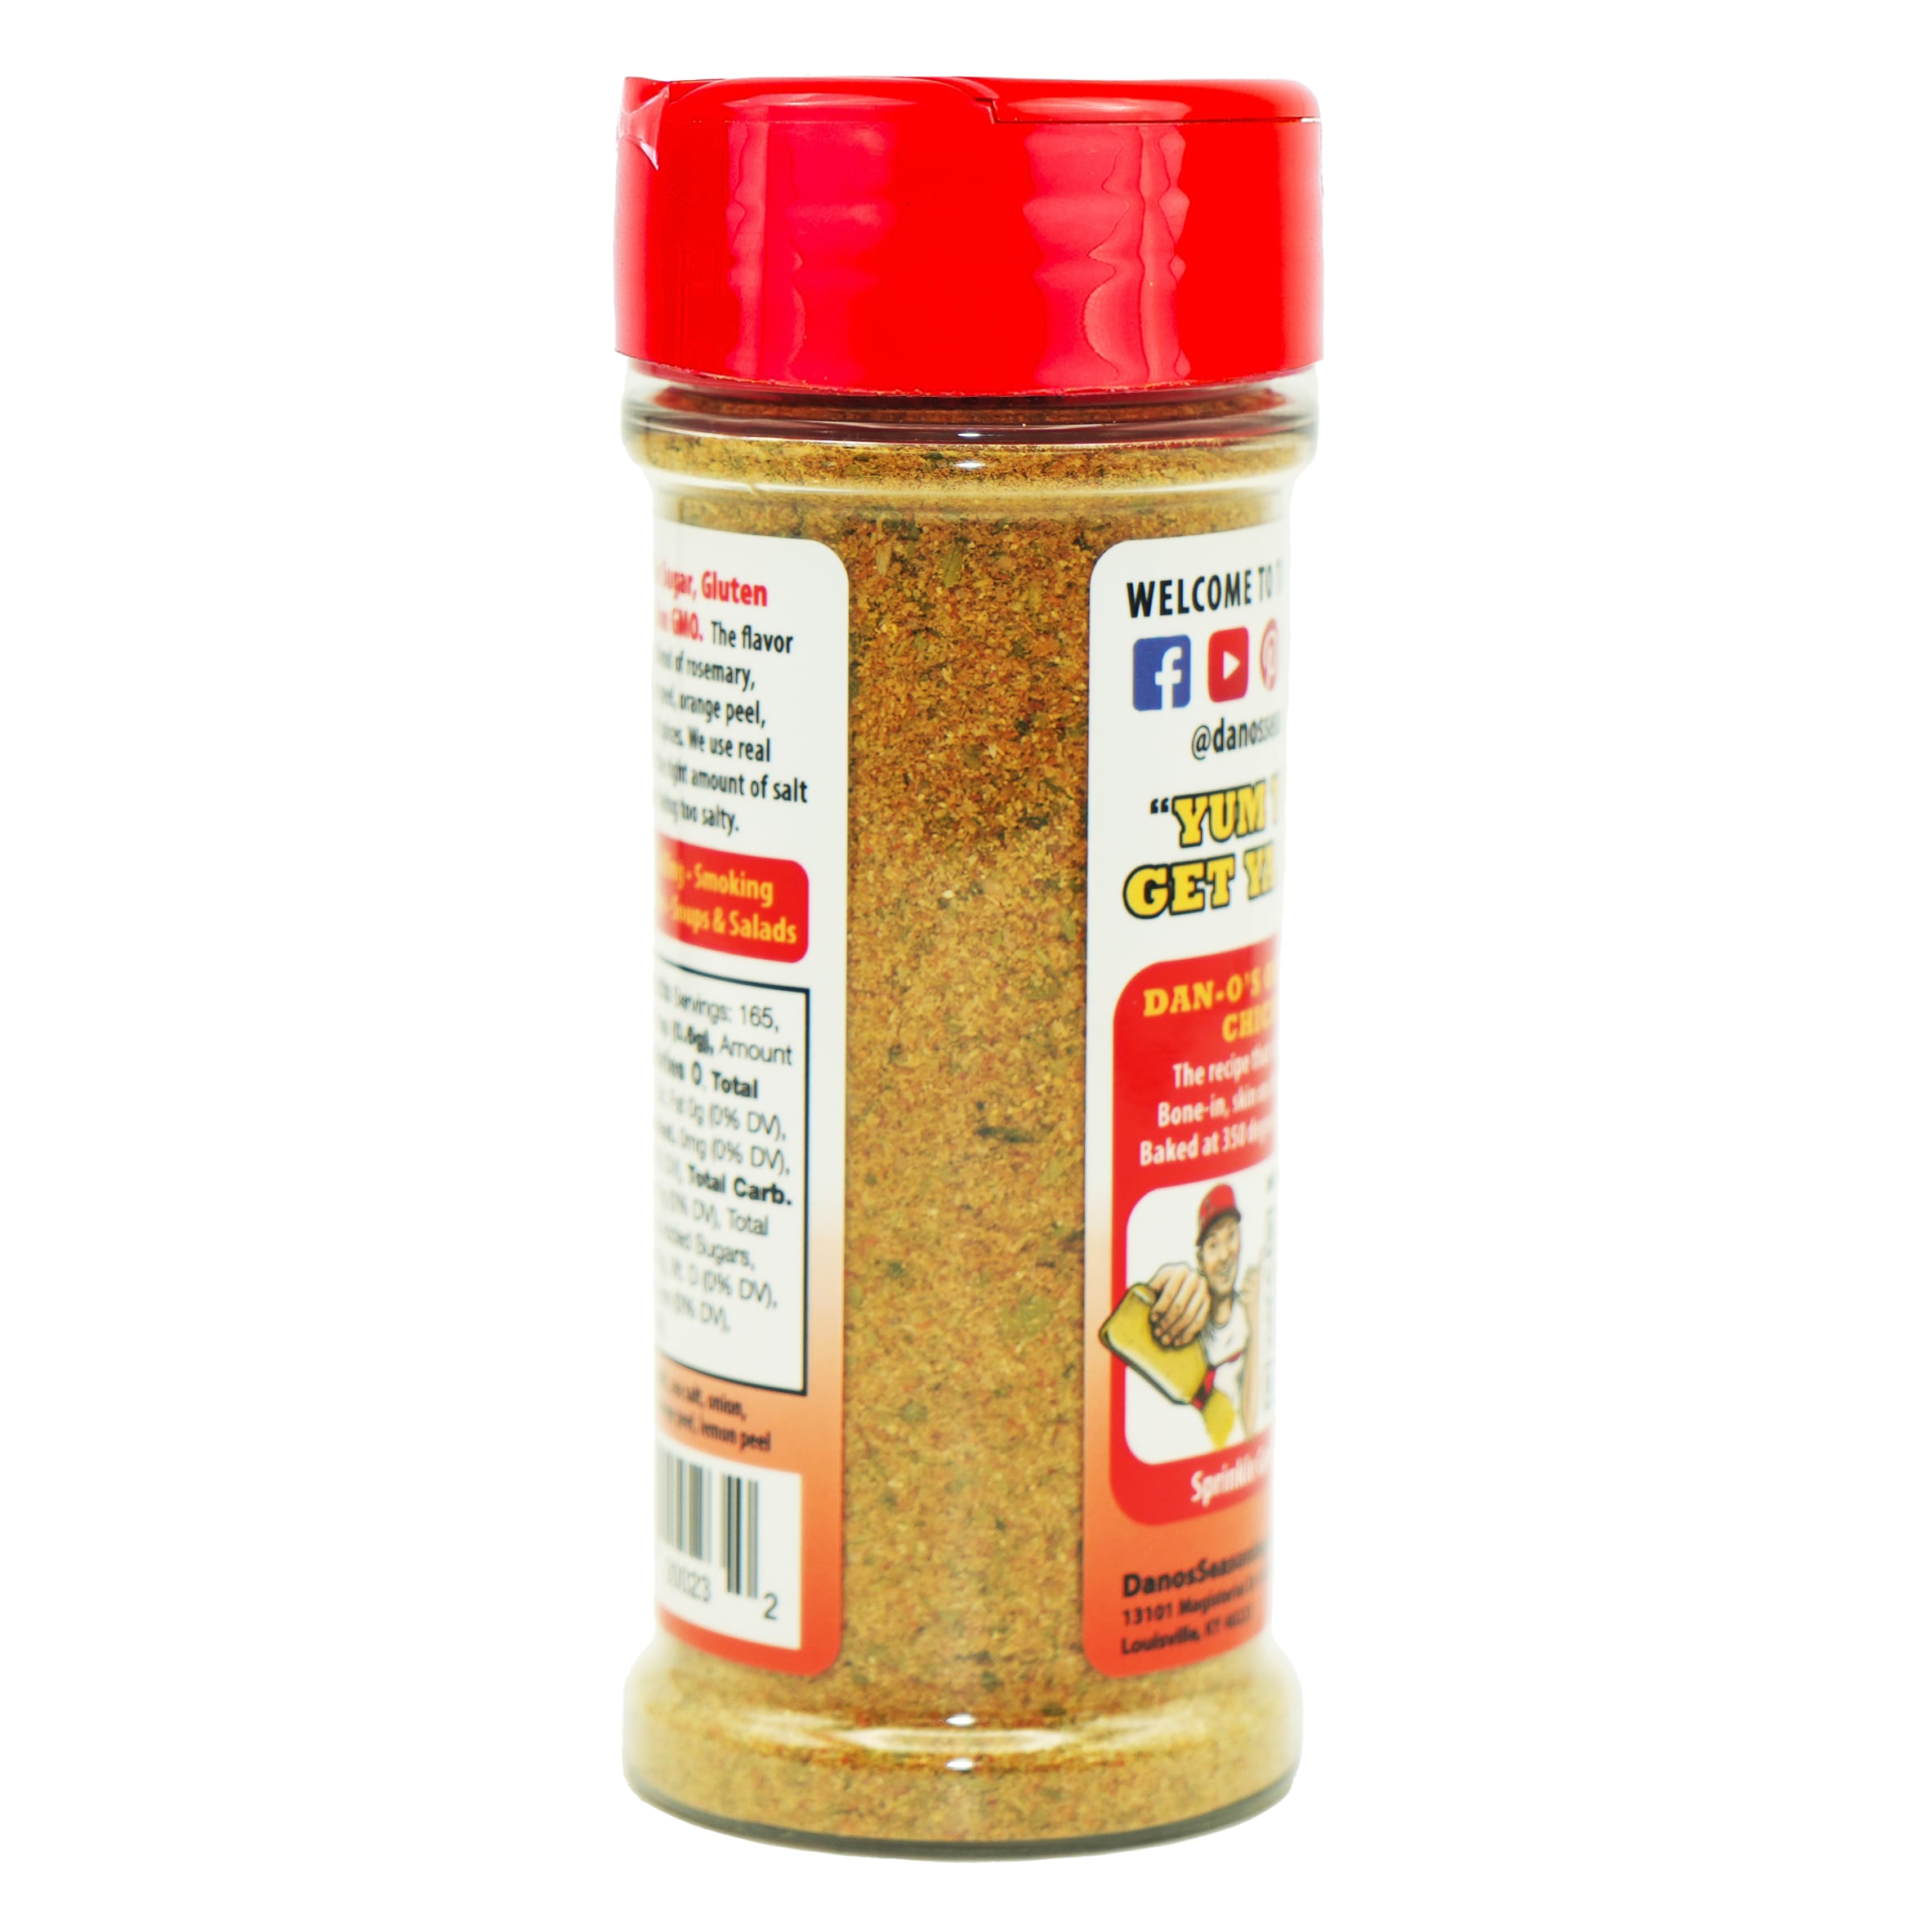 Dan-O's Spicy Seasoning - All-Natural, Low Sodium, Zero Sugar, 3.5oz